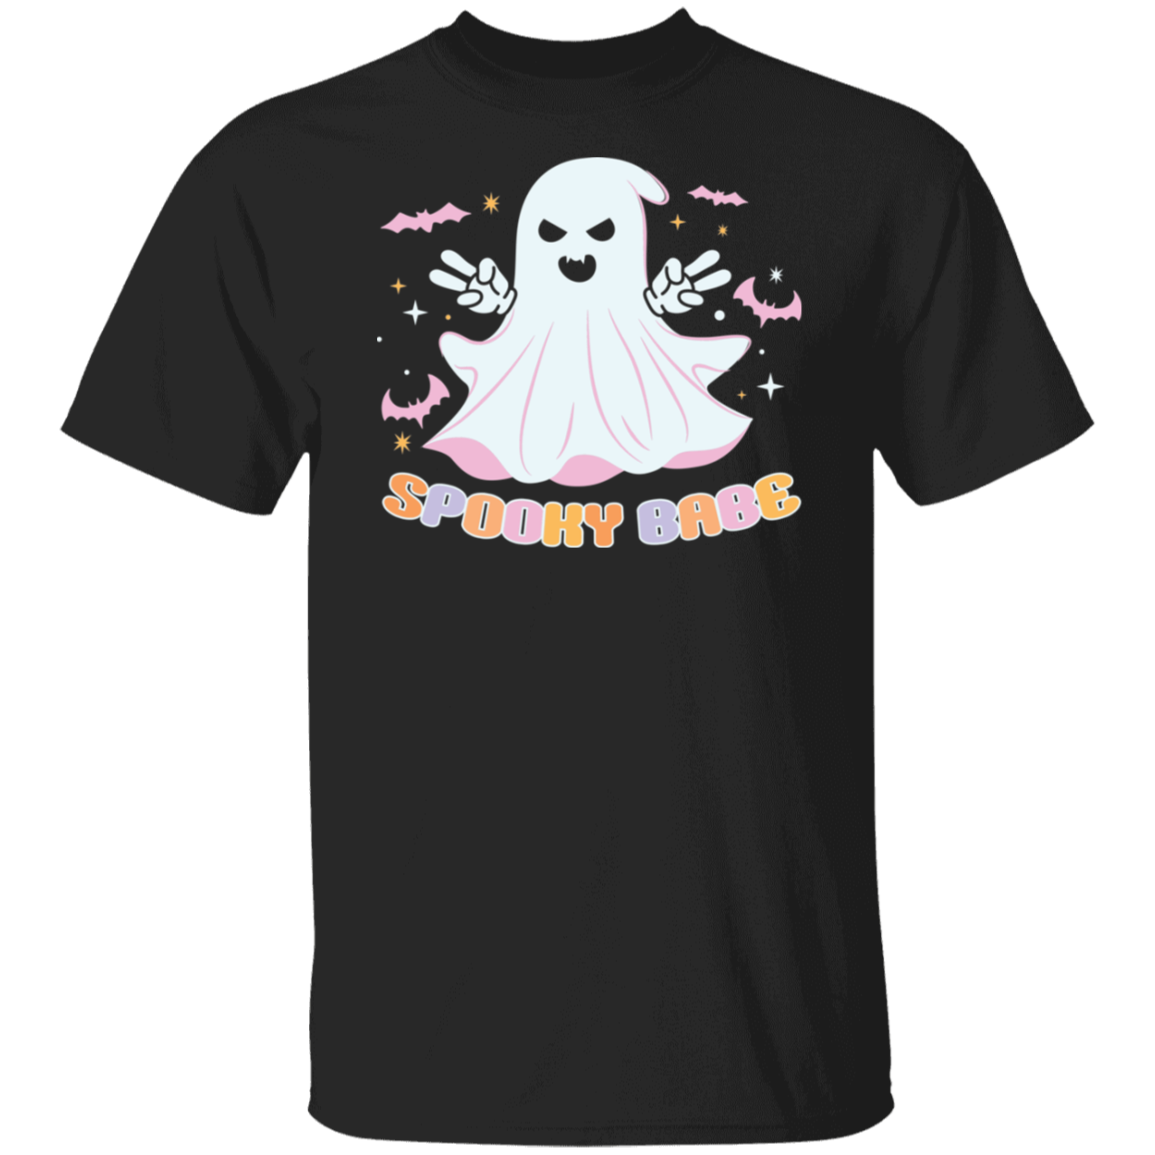 Spooky Babe | Premium Short Sleeve T-Shirt